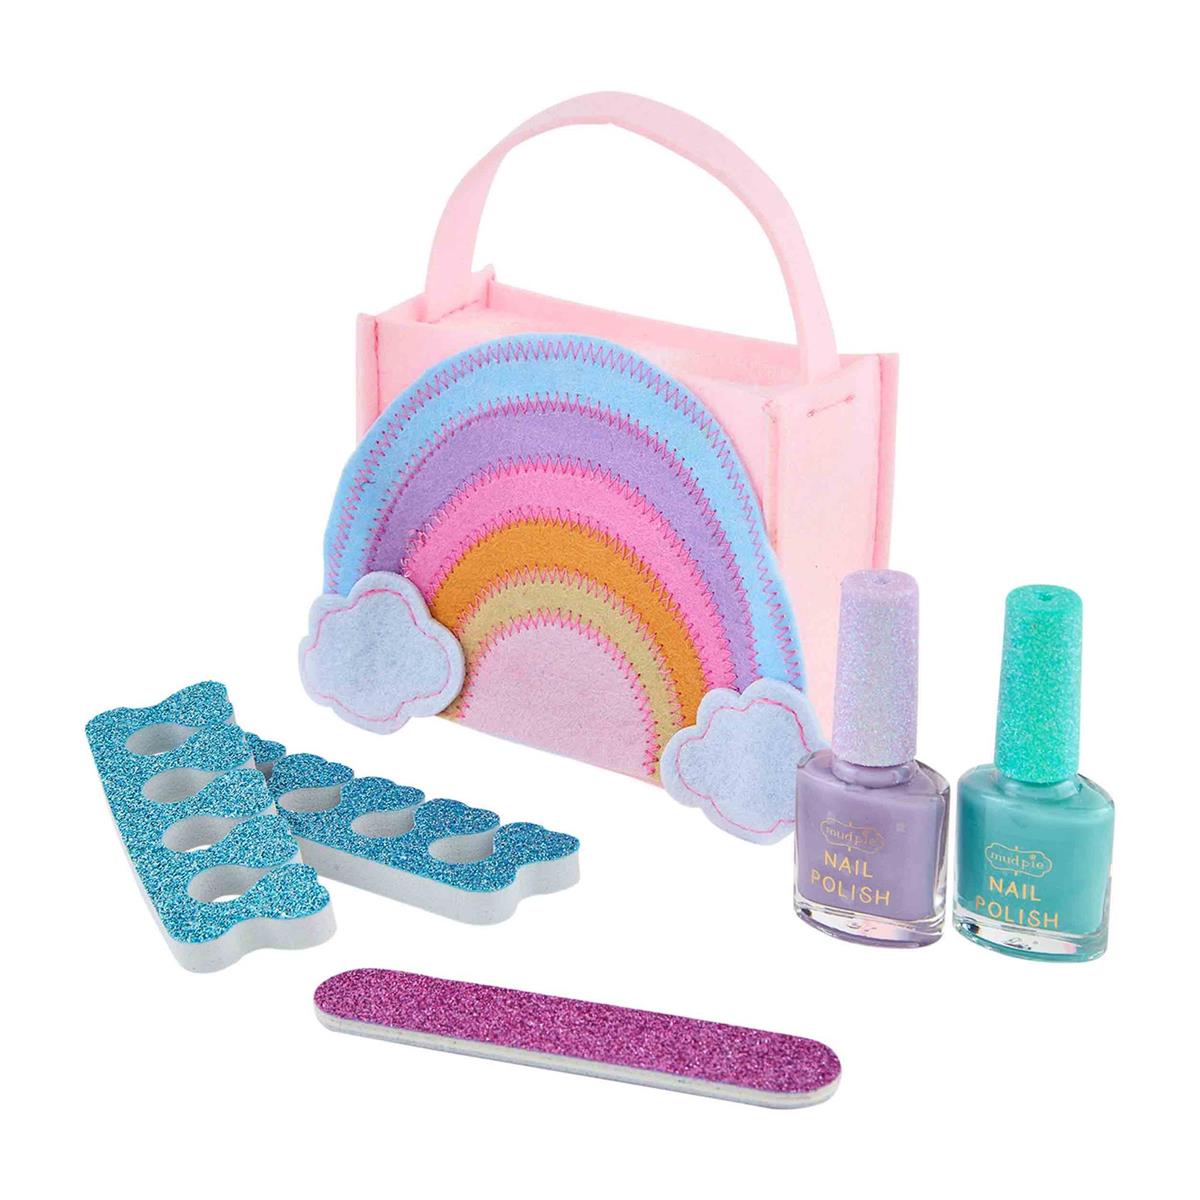 Amazon.com : Kids Nail Polish Sets - 12 Pcs 100% Non Toxic Peel Off Water  Based Safe Quick Dry Nail Polish Kit - Birthday Gift Nail Paint Set for  Girls - Ages 3+ : Beauty & Personal Care